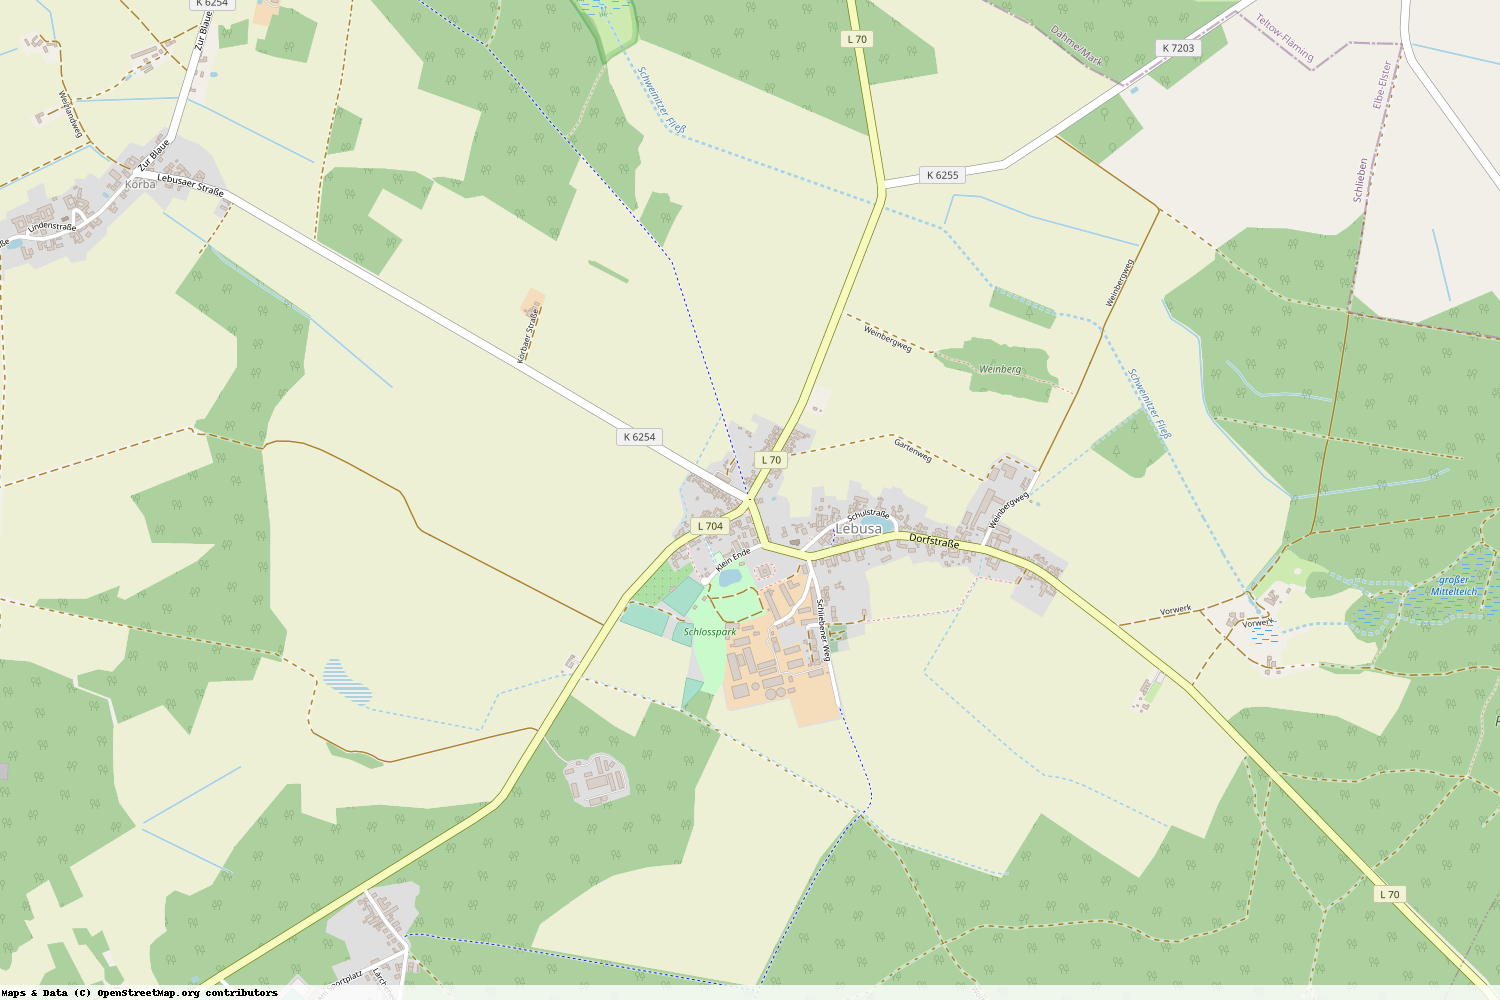 Ist gerade Stromausfall in Brandenburg - Elbe-Elster - Lebusa?